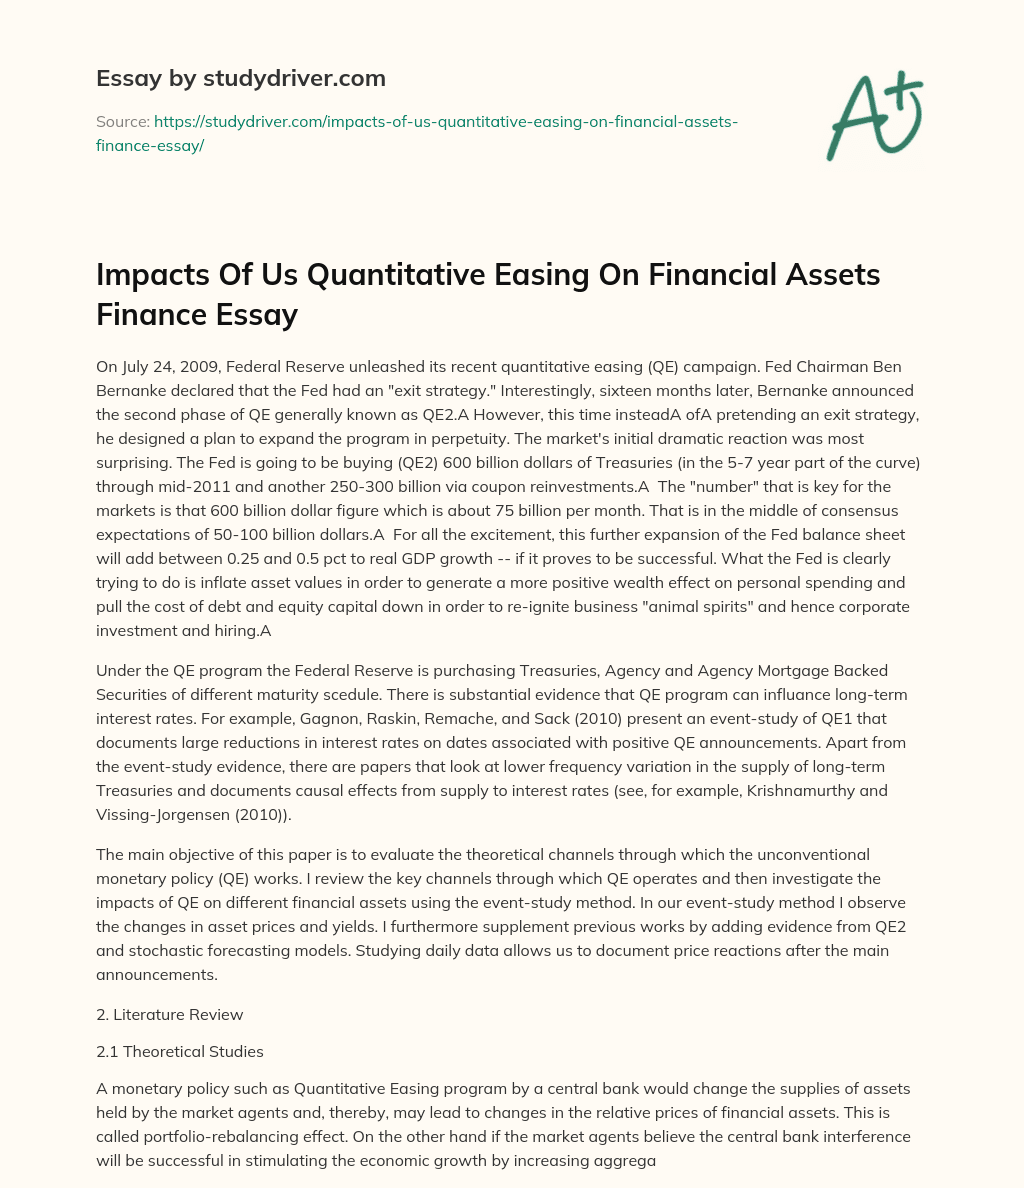 Impacts of Us Quantitative Easing on Financial Assets Finance Essay essay